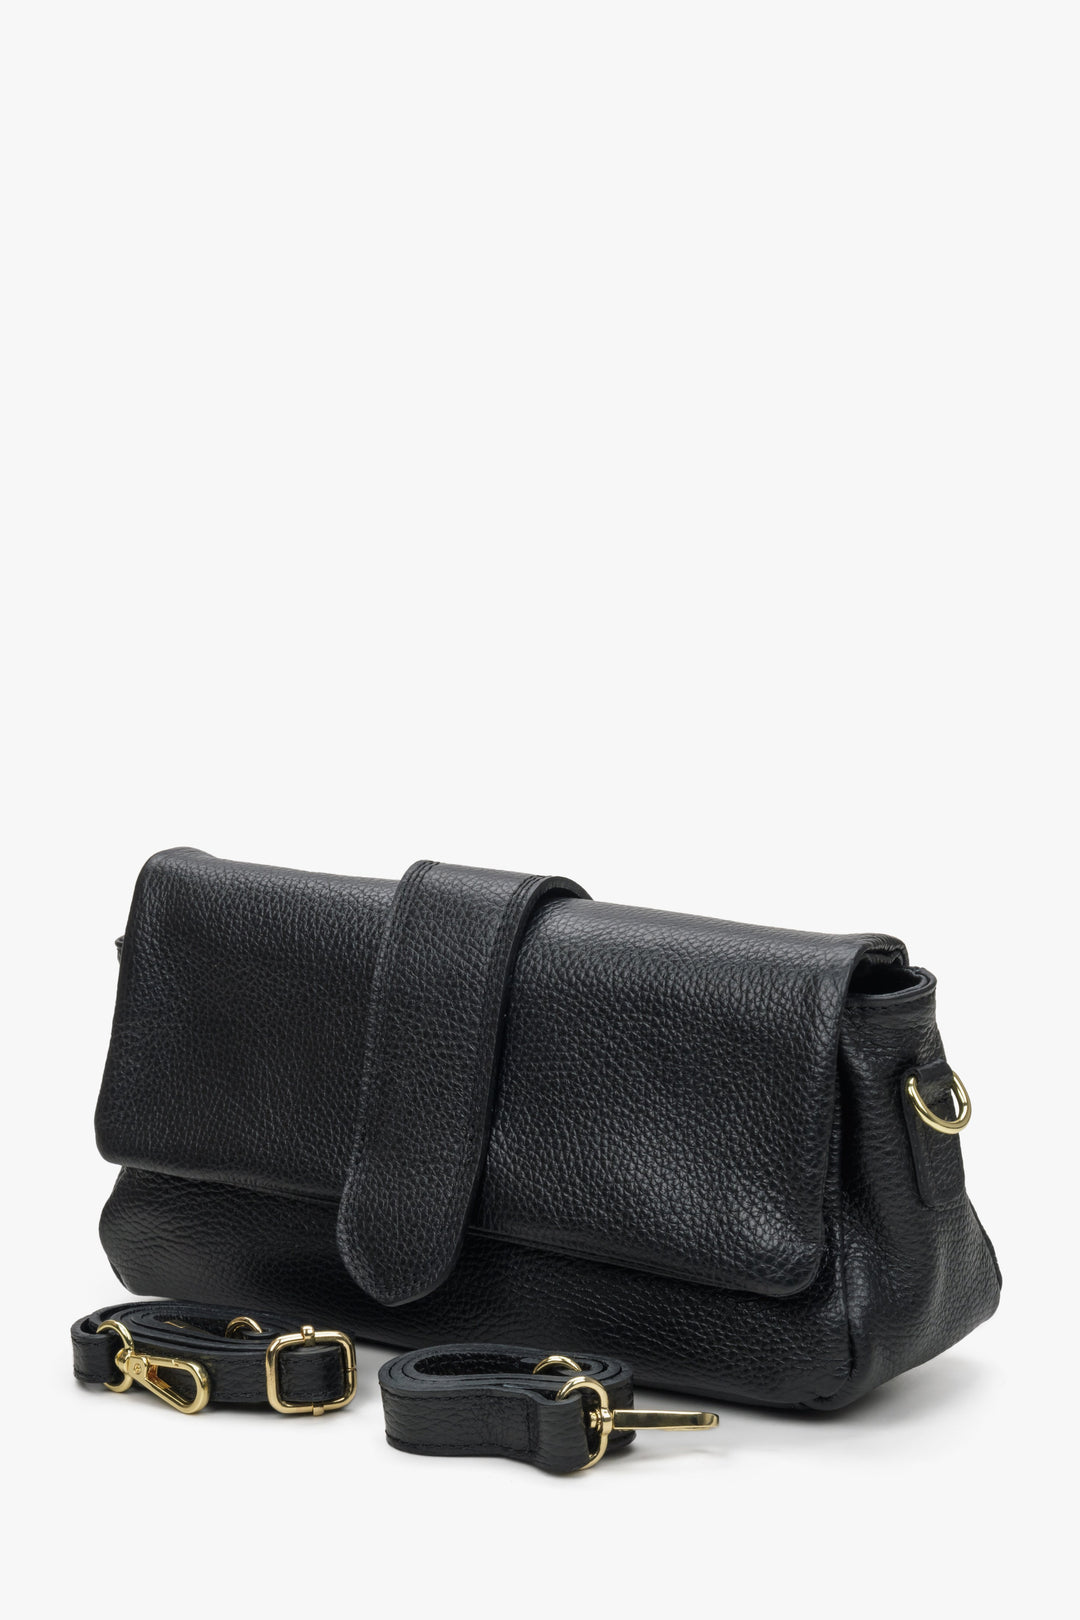 Women's black leather handbag with adjustable strap.